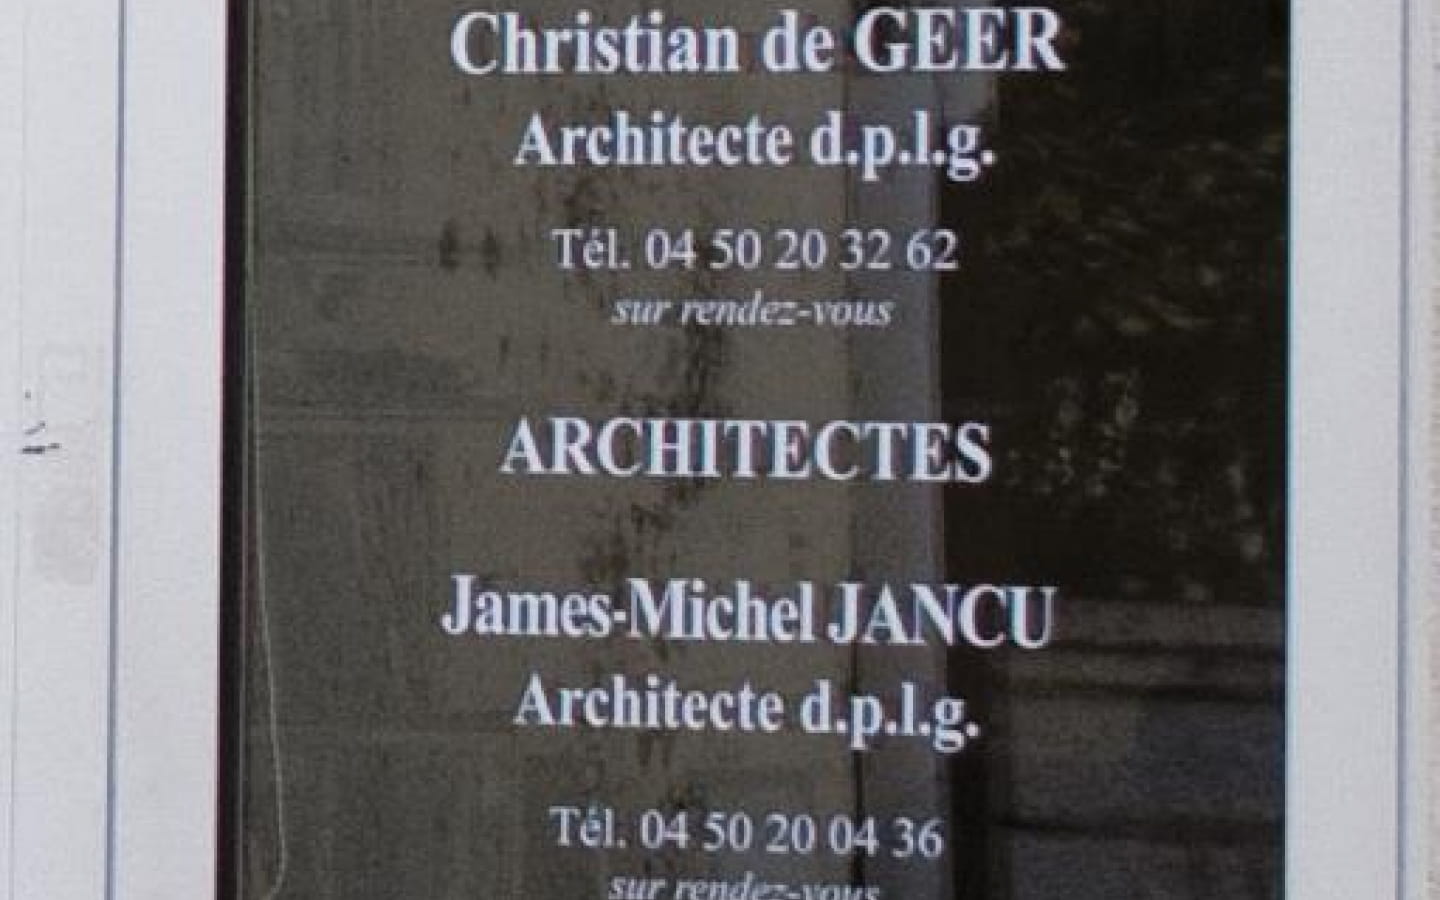 M Jancu Architecte